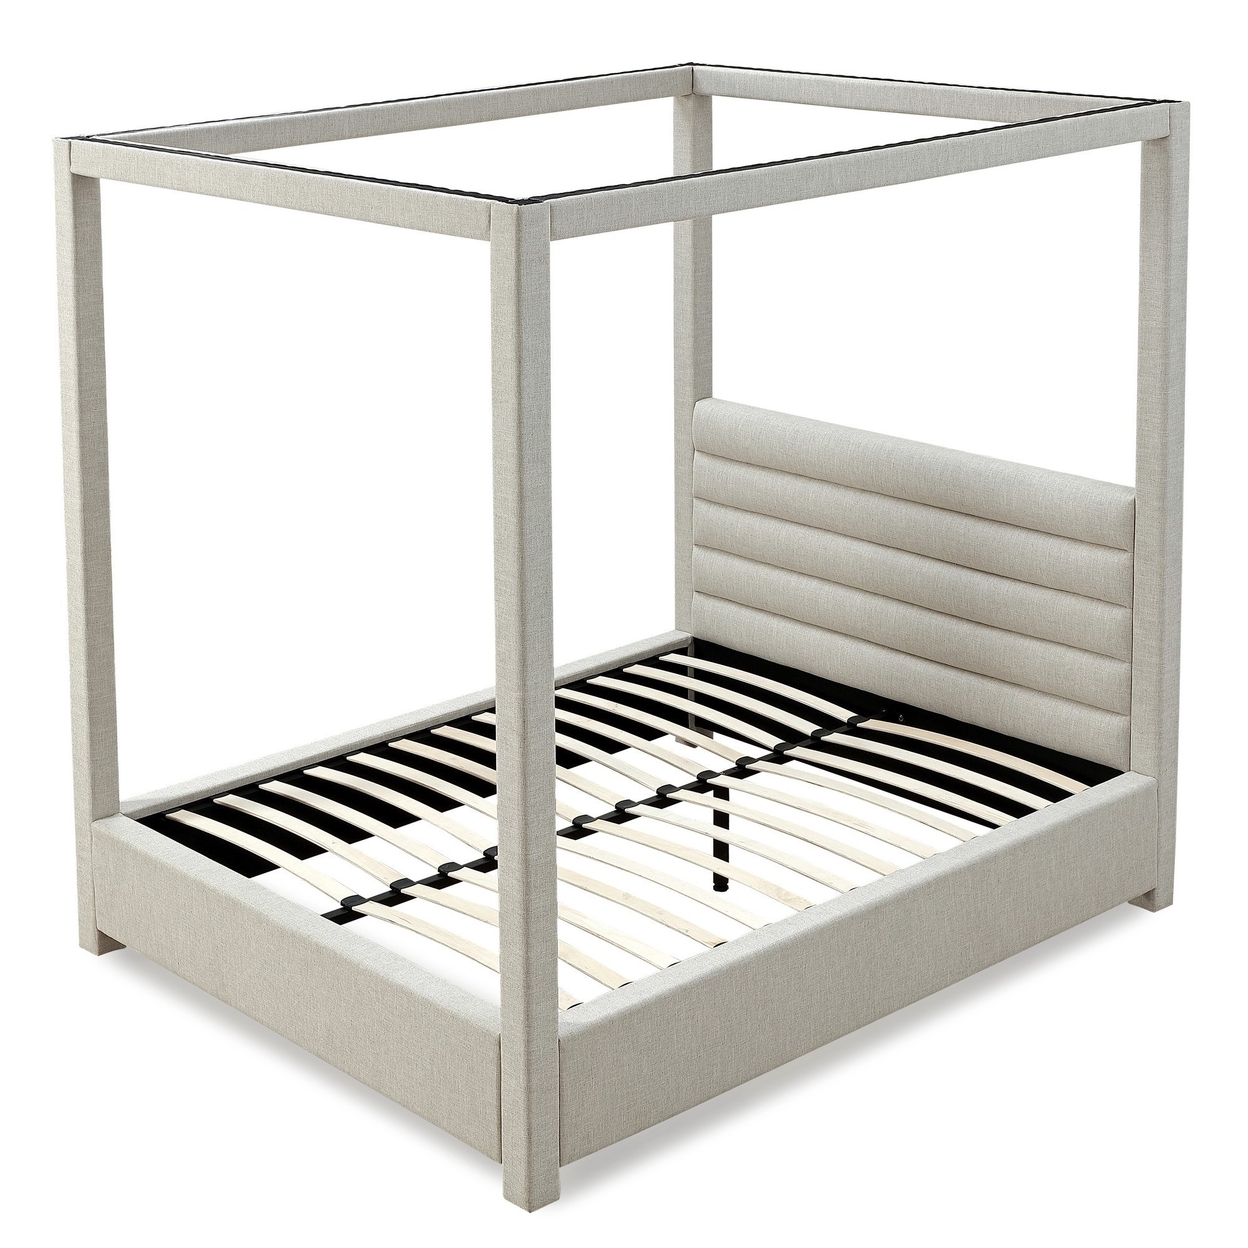 Riu Queen Size Canopy Bed, Panel Headboard, Tufted Gray Linen Upholstery- Saltoro Sherpi